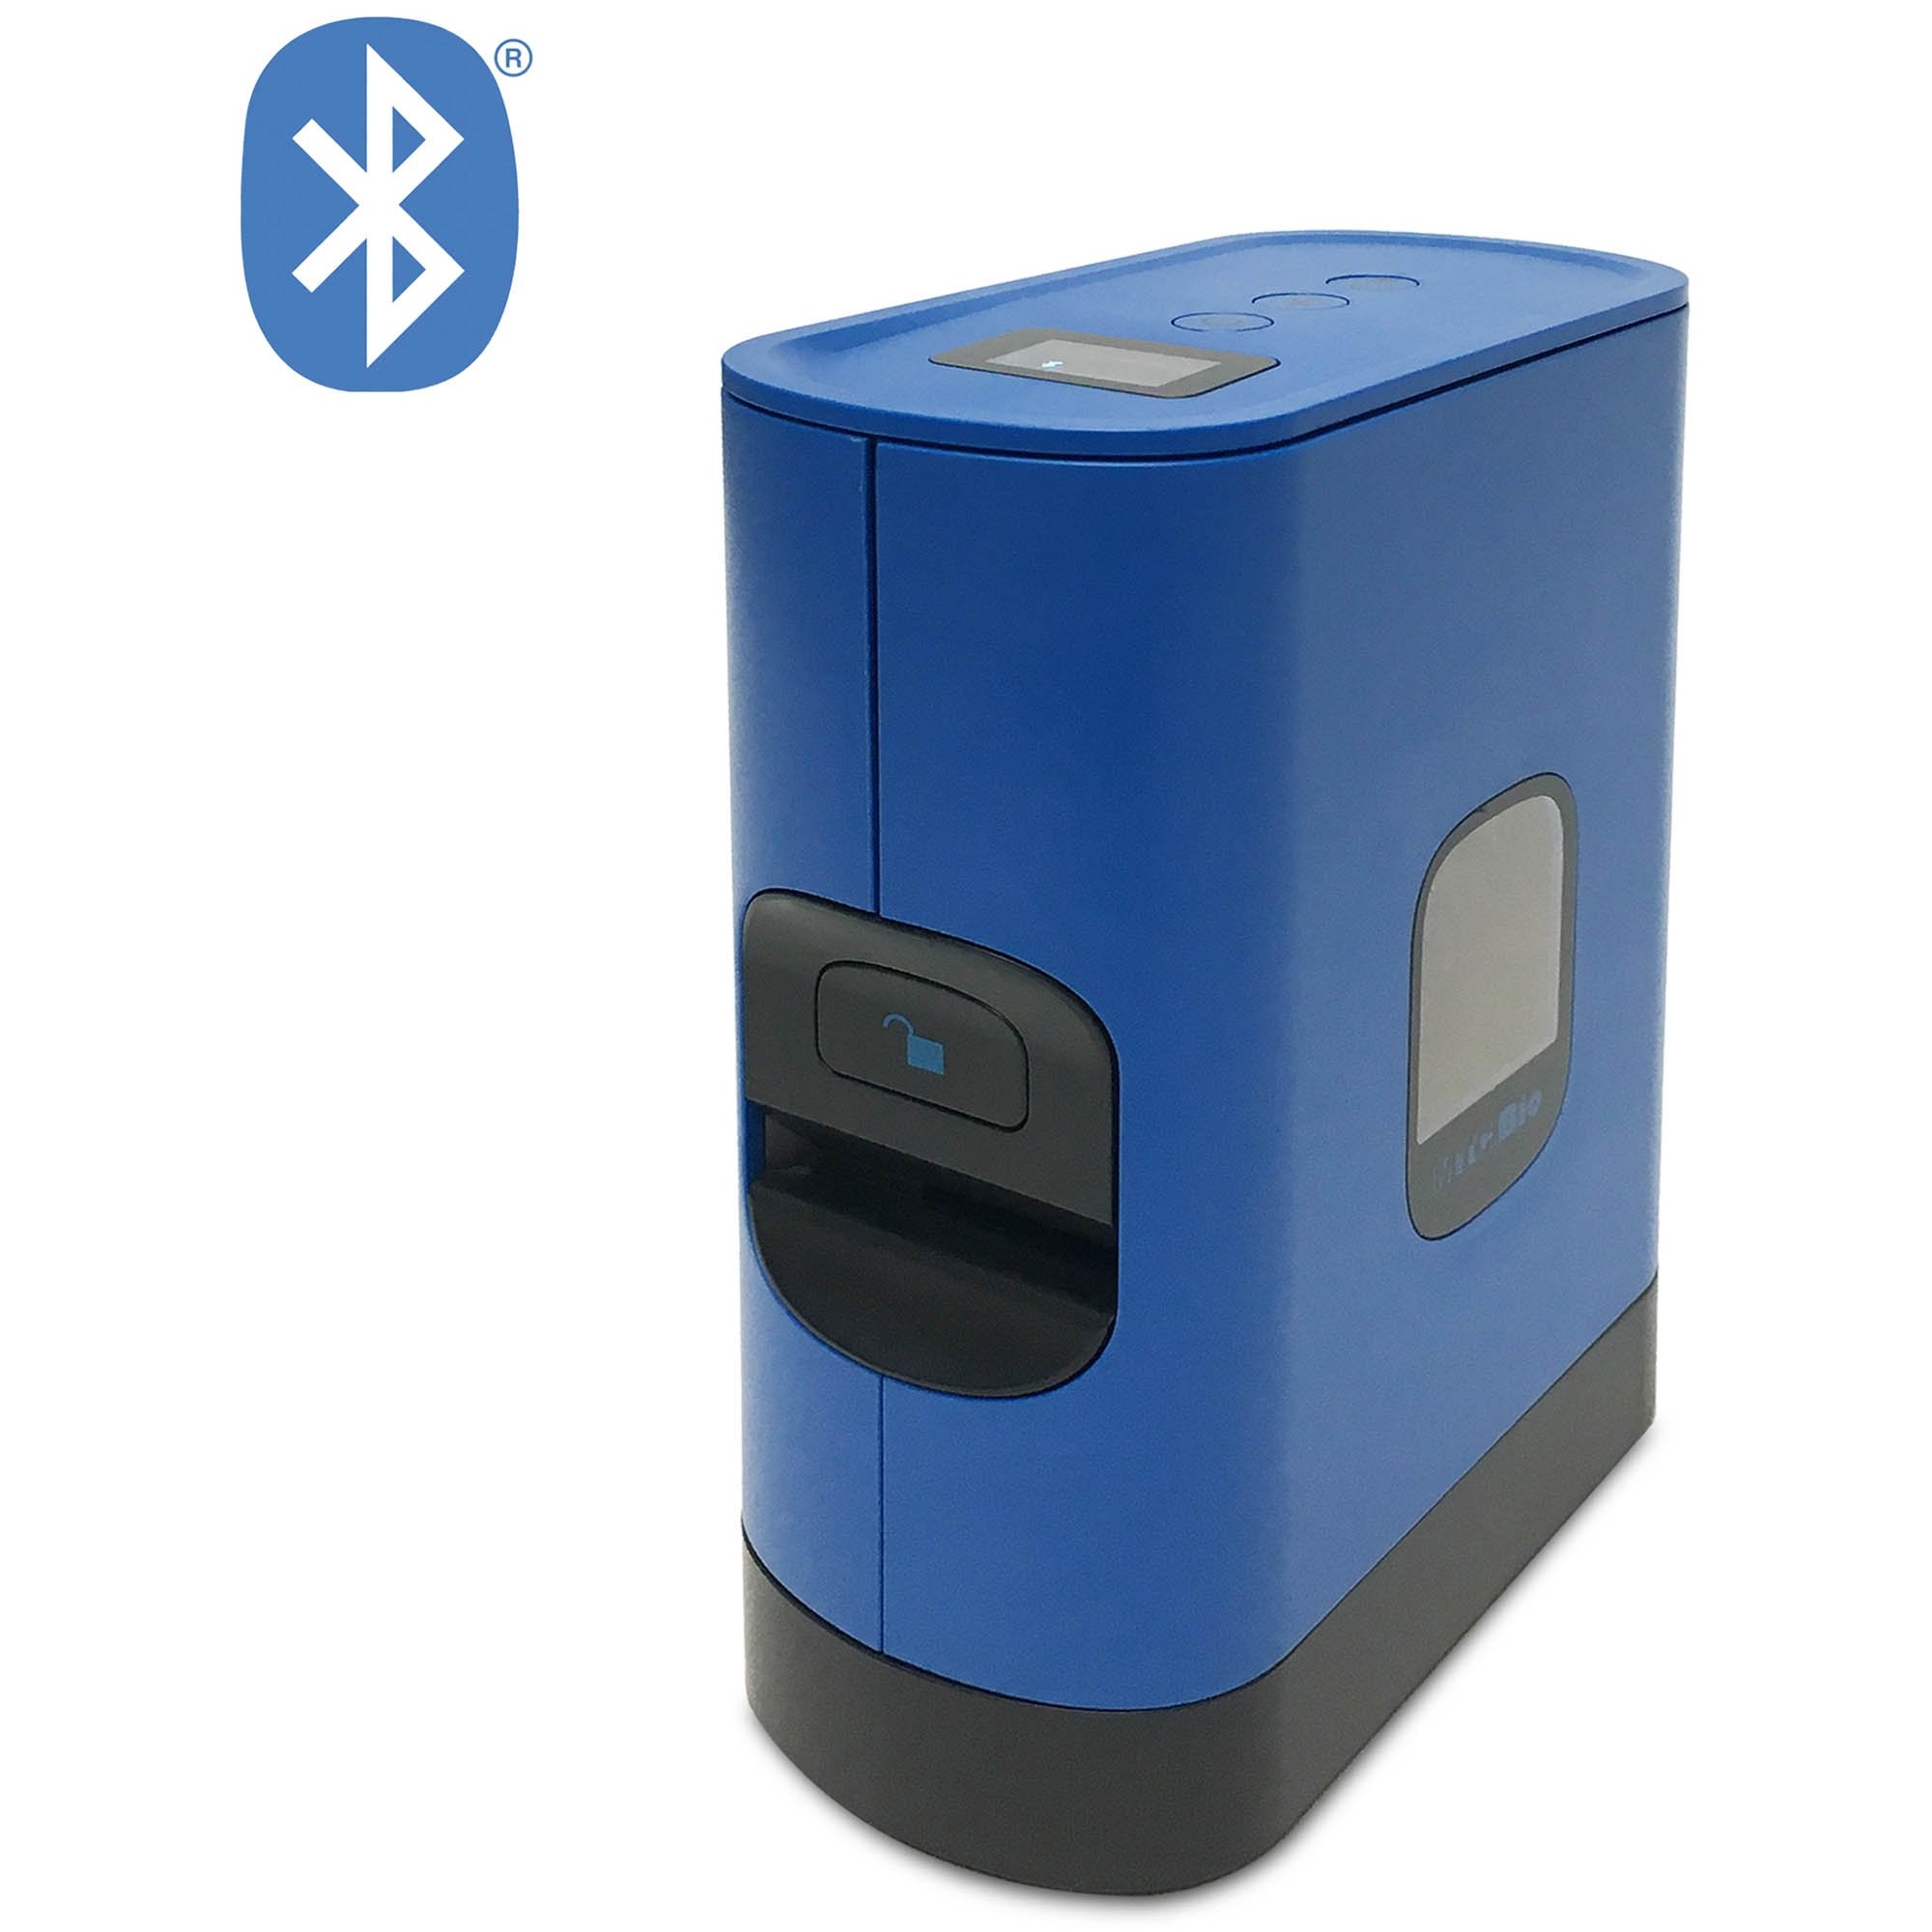 MTC L3000 Bluetooth Enabled Printer